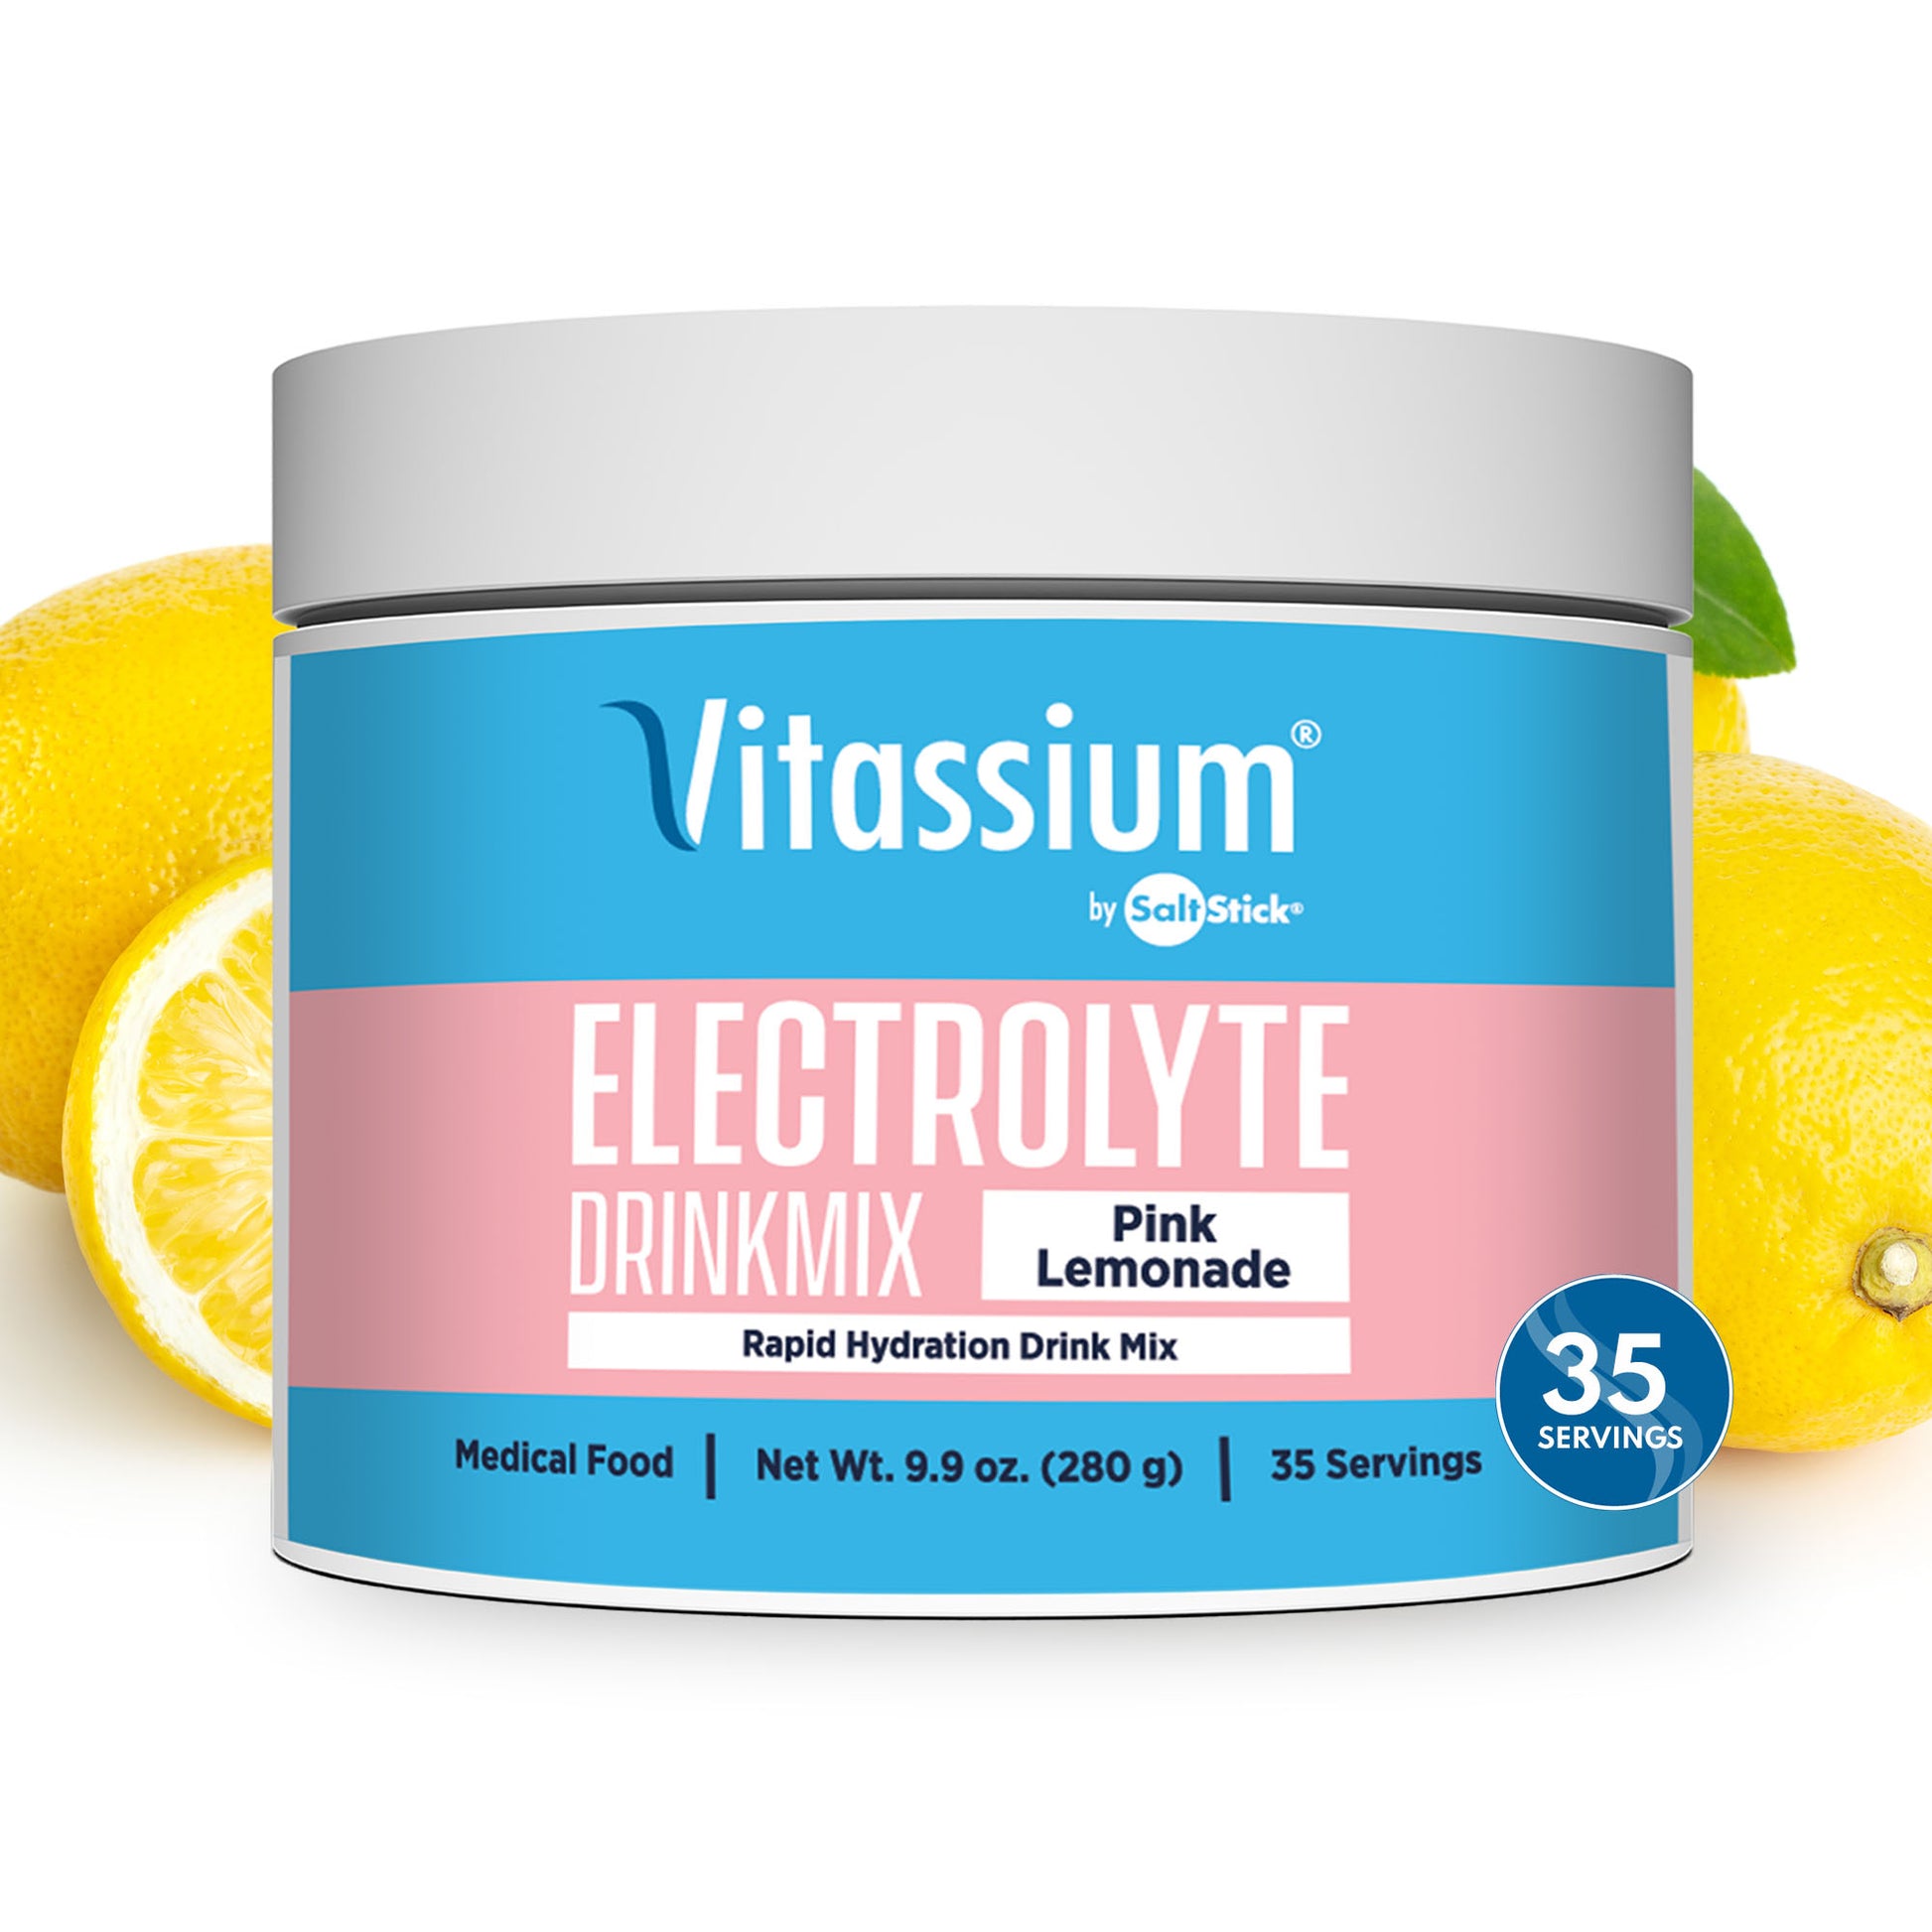 Vitassium Electrolyte Drink Mix Pink Lemonade tub